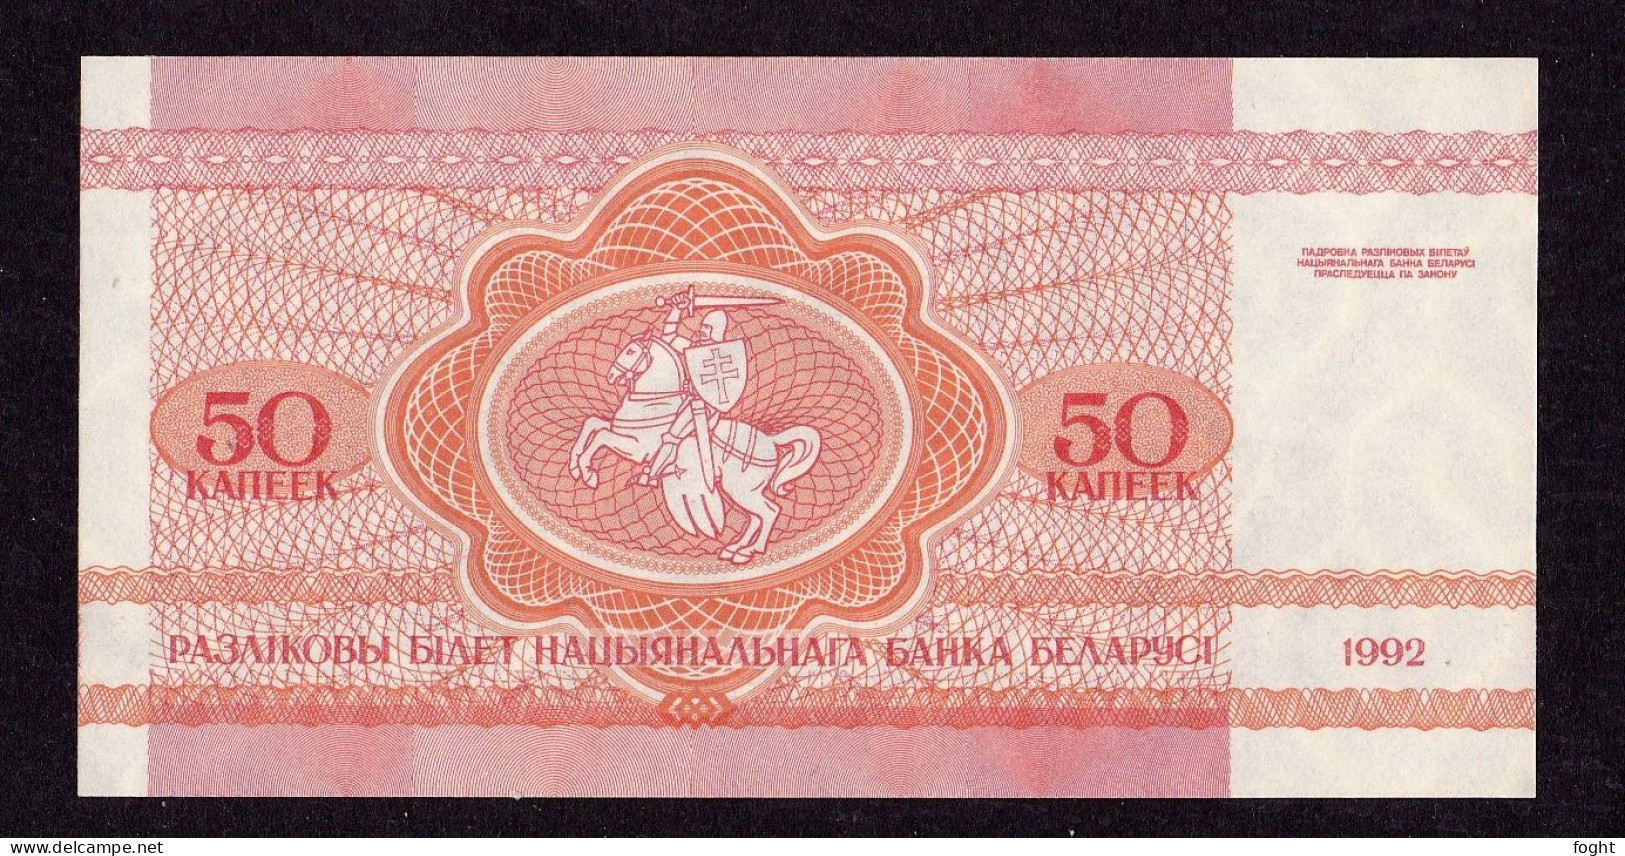 1992 Belarus Belarus National Bank Banknote 50 Kapeek,P#1 - Wit-Rusland